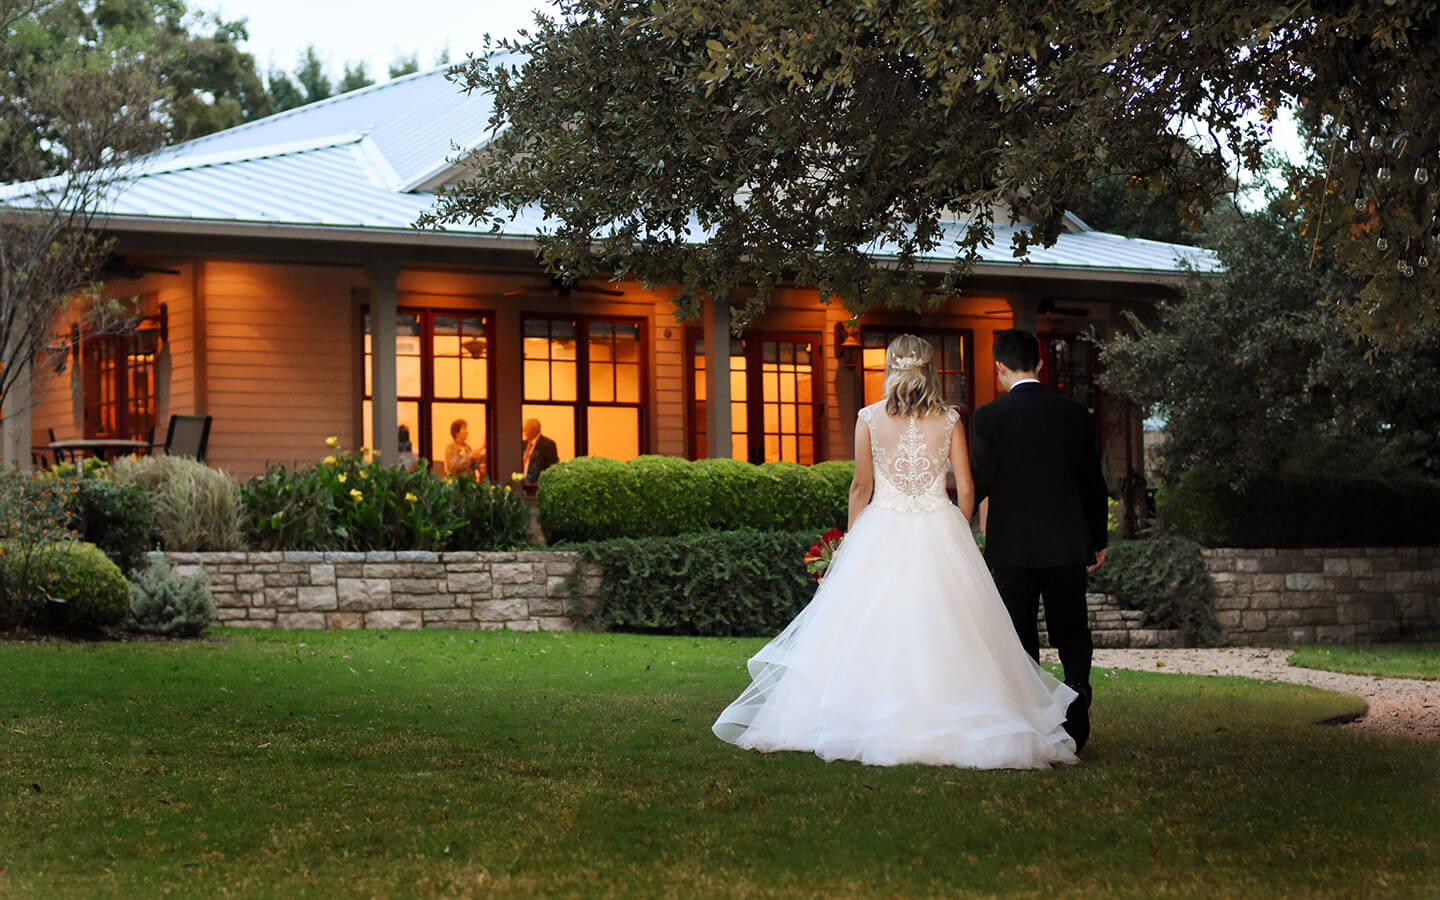 Texas waterfront wedding venues - bride and groom